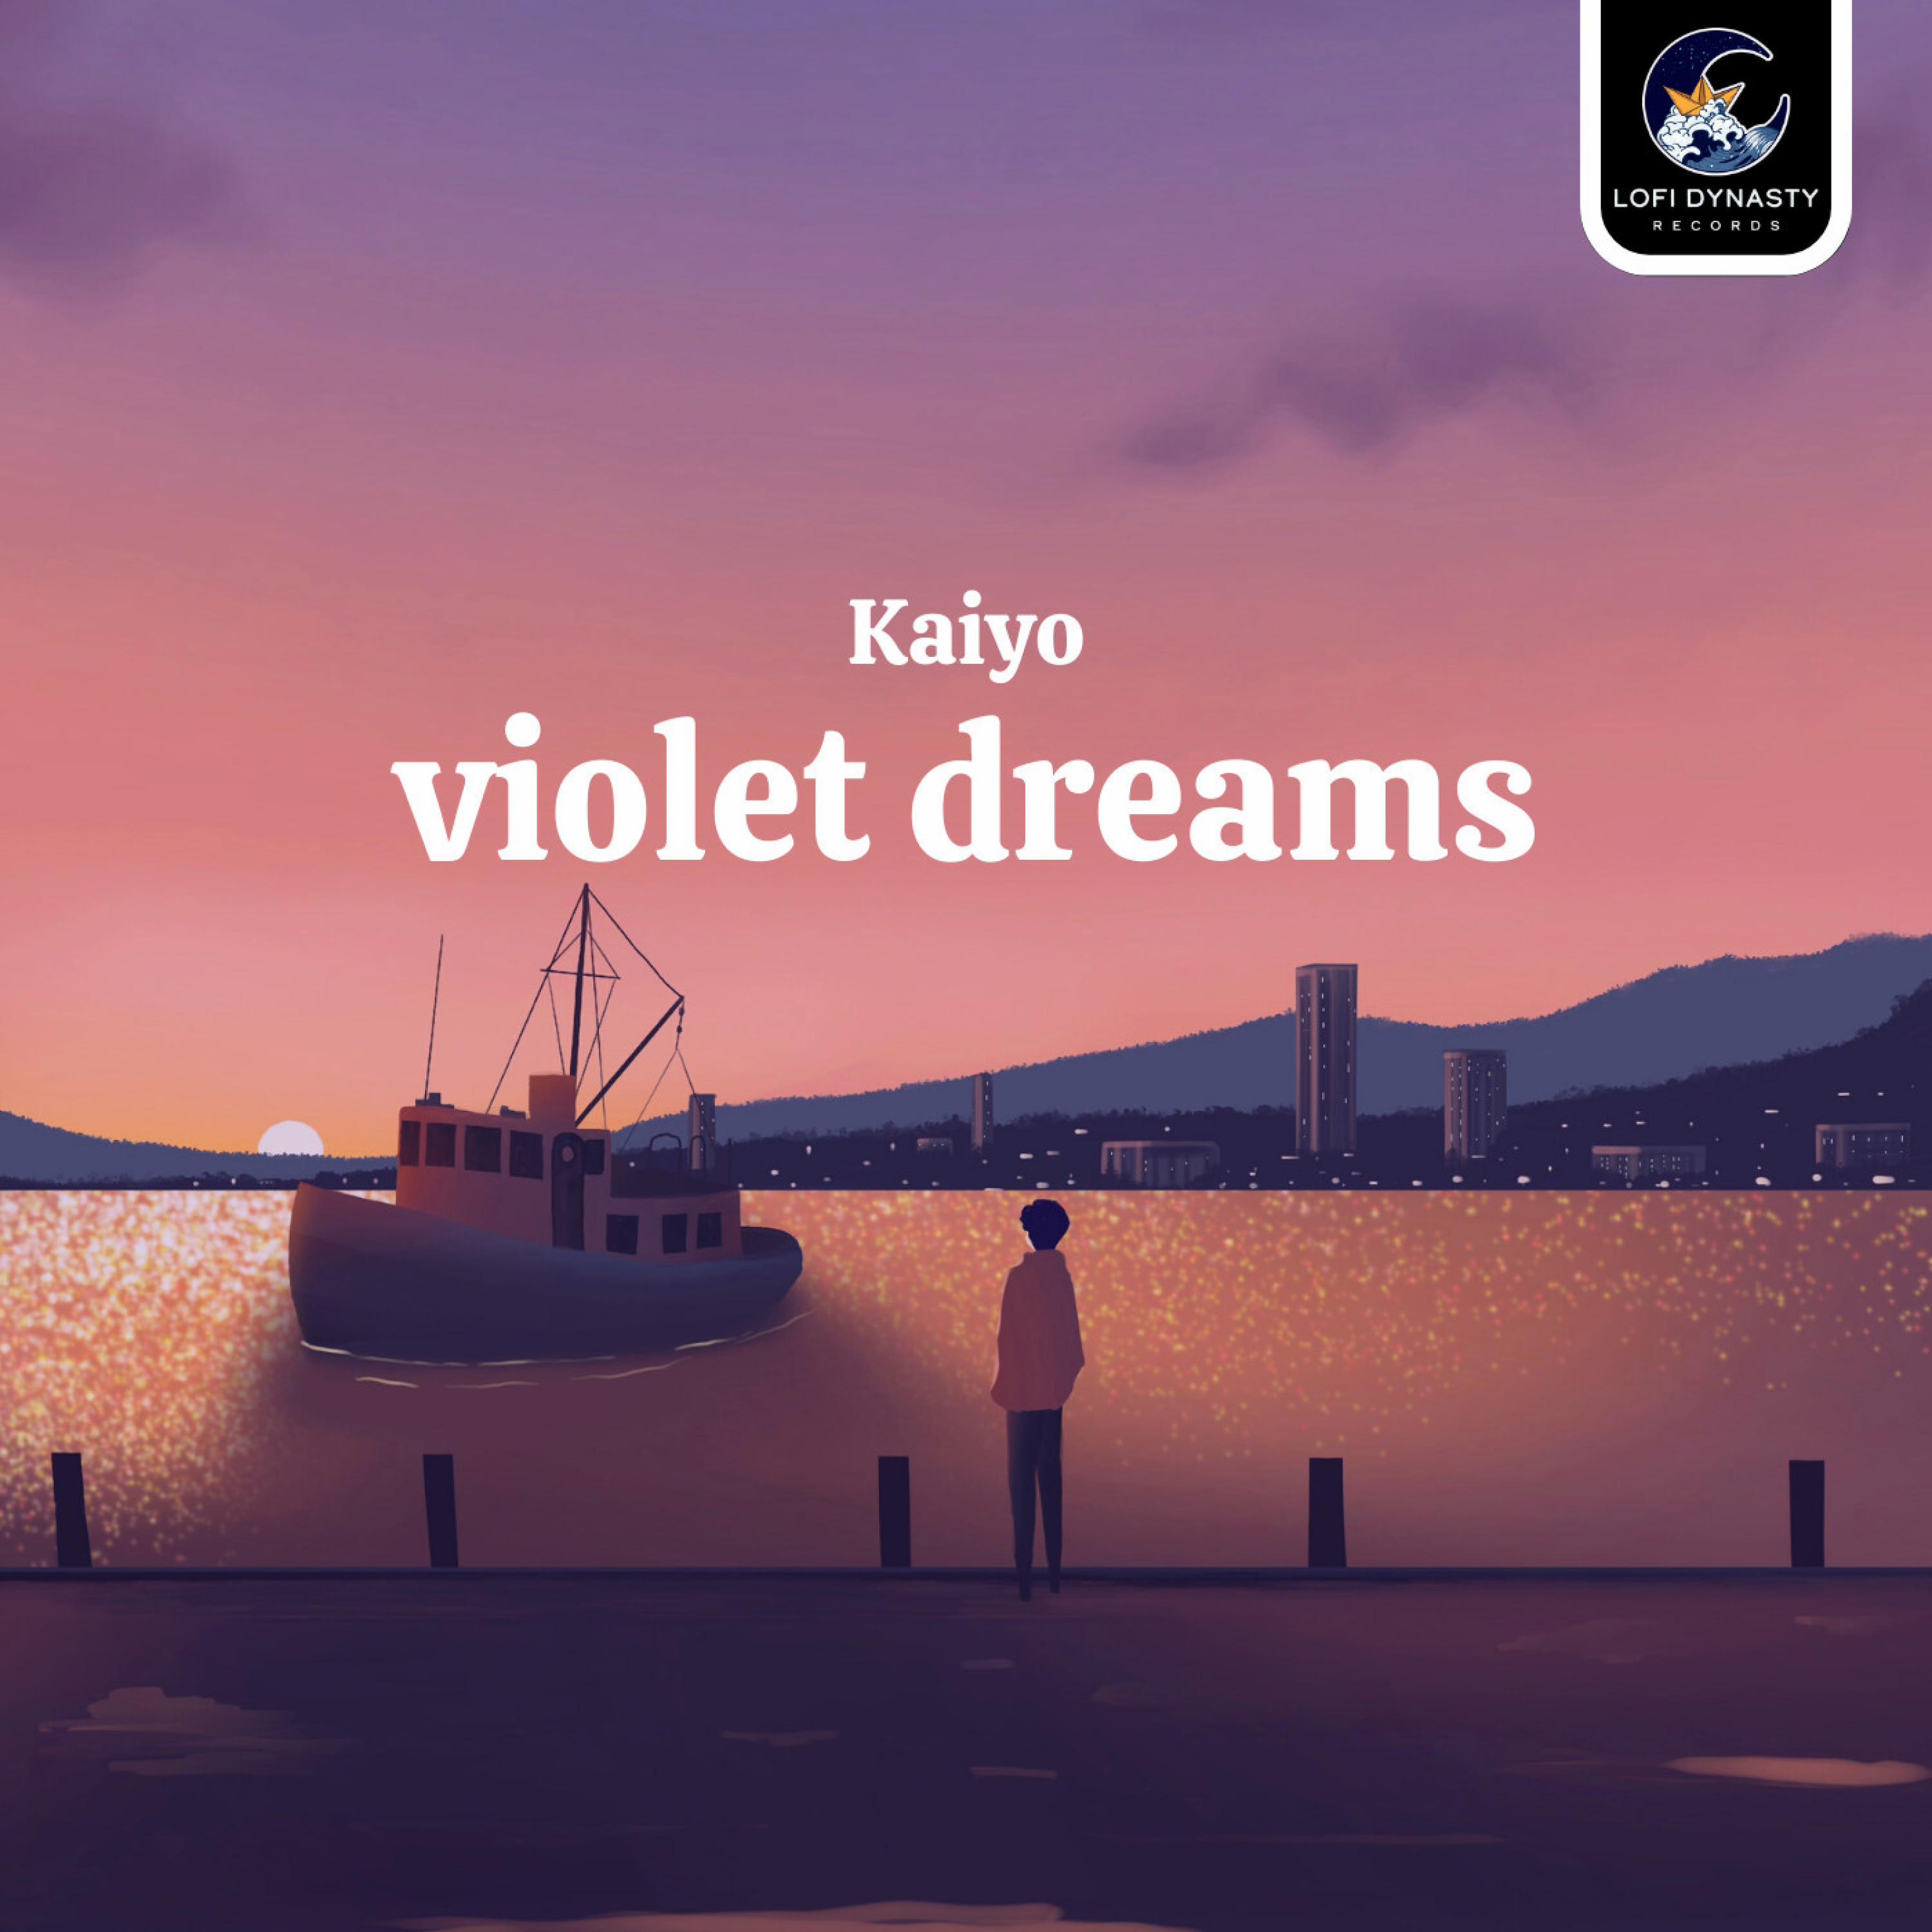 Lofi Dynasty - violet dreams (feat. Kaiyo)